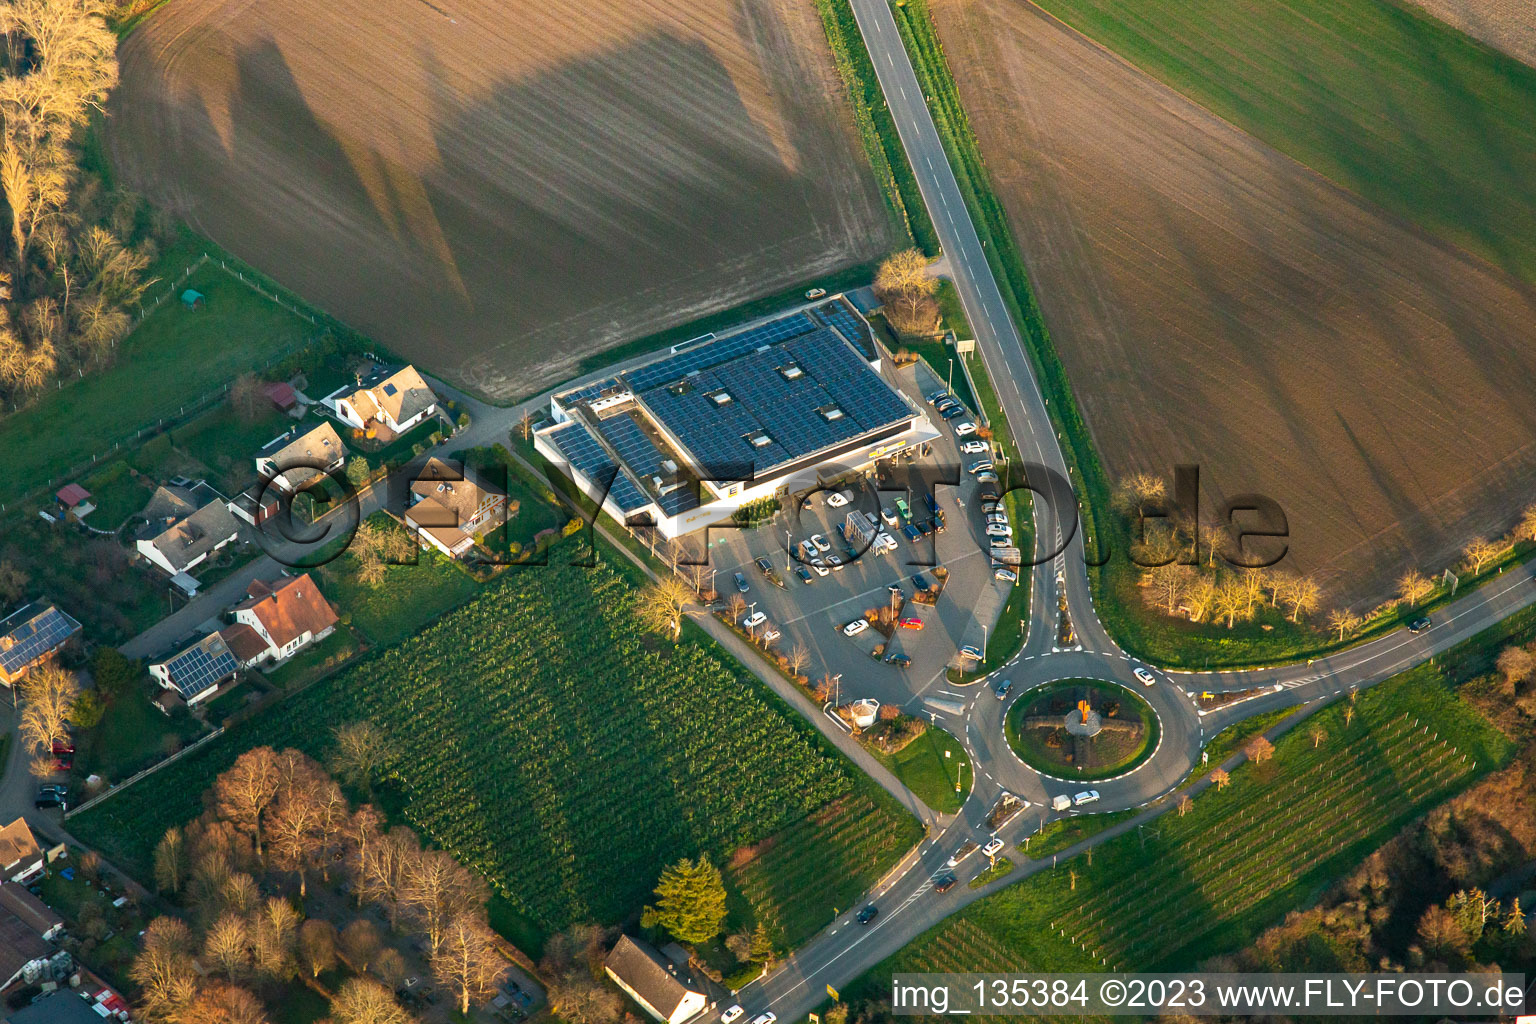 Aerial view of EDEKA Paul in the district Appenhofen in Billigheim-Ingenheim in the state Rhineland-Palatinate, Germany